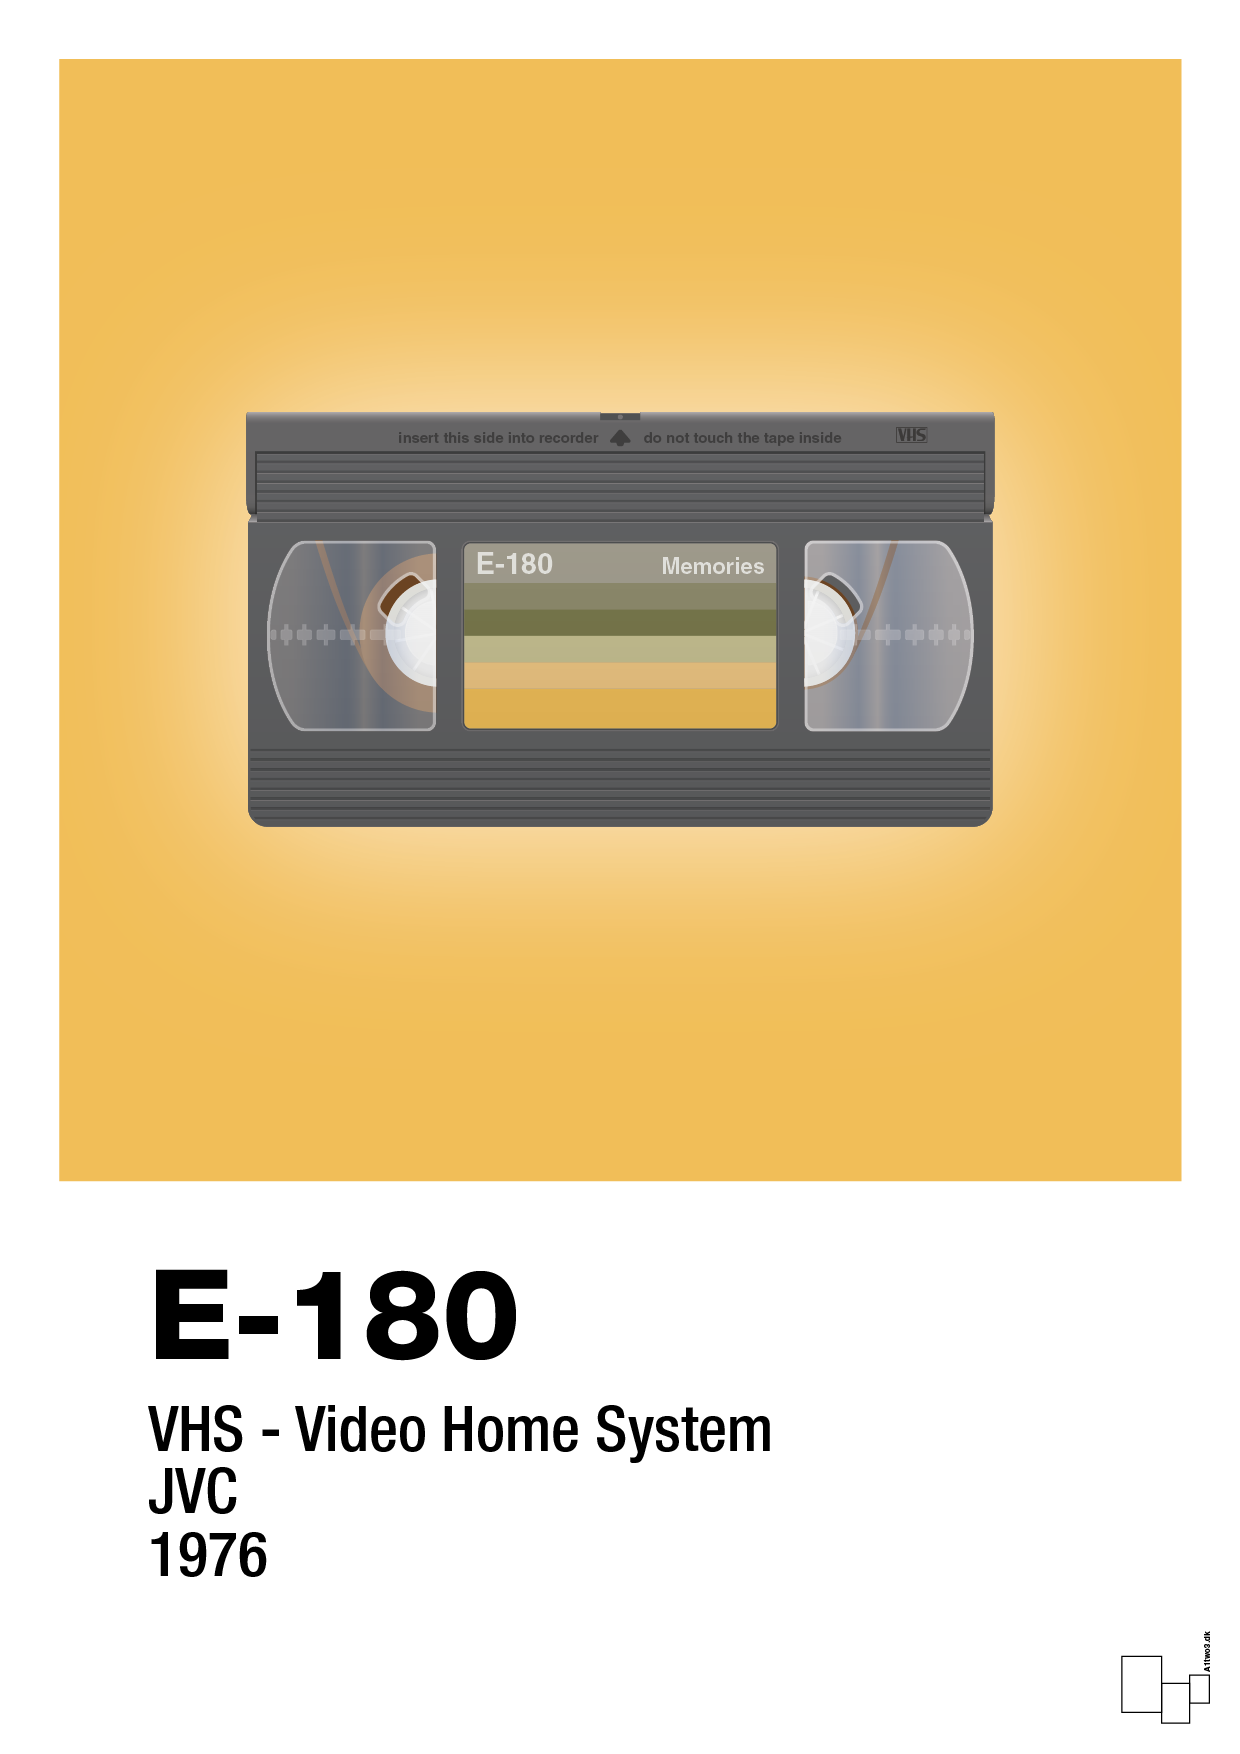 videobånd e-180 - Plakat med Grafik i Honeycomb